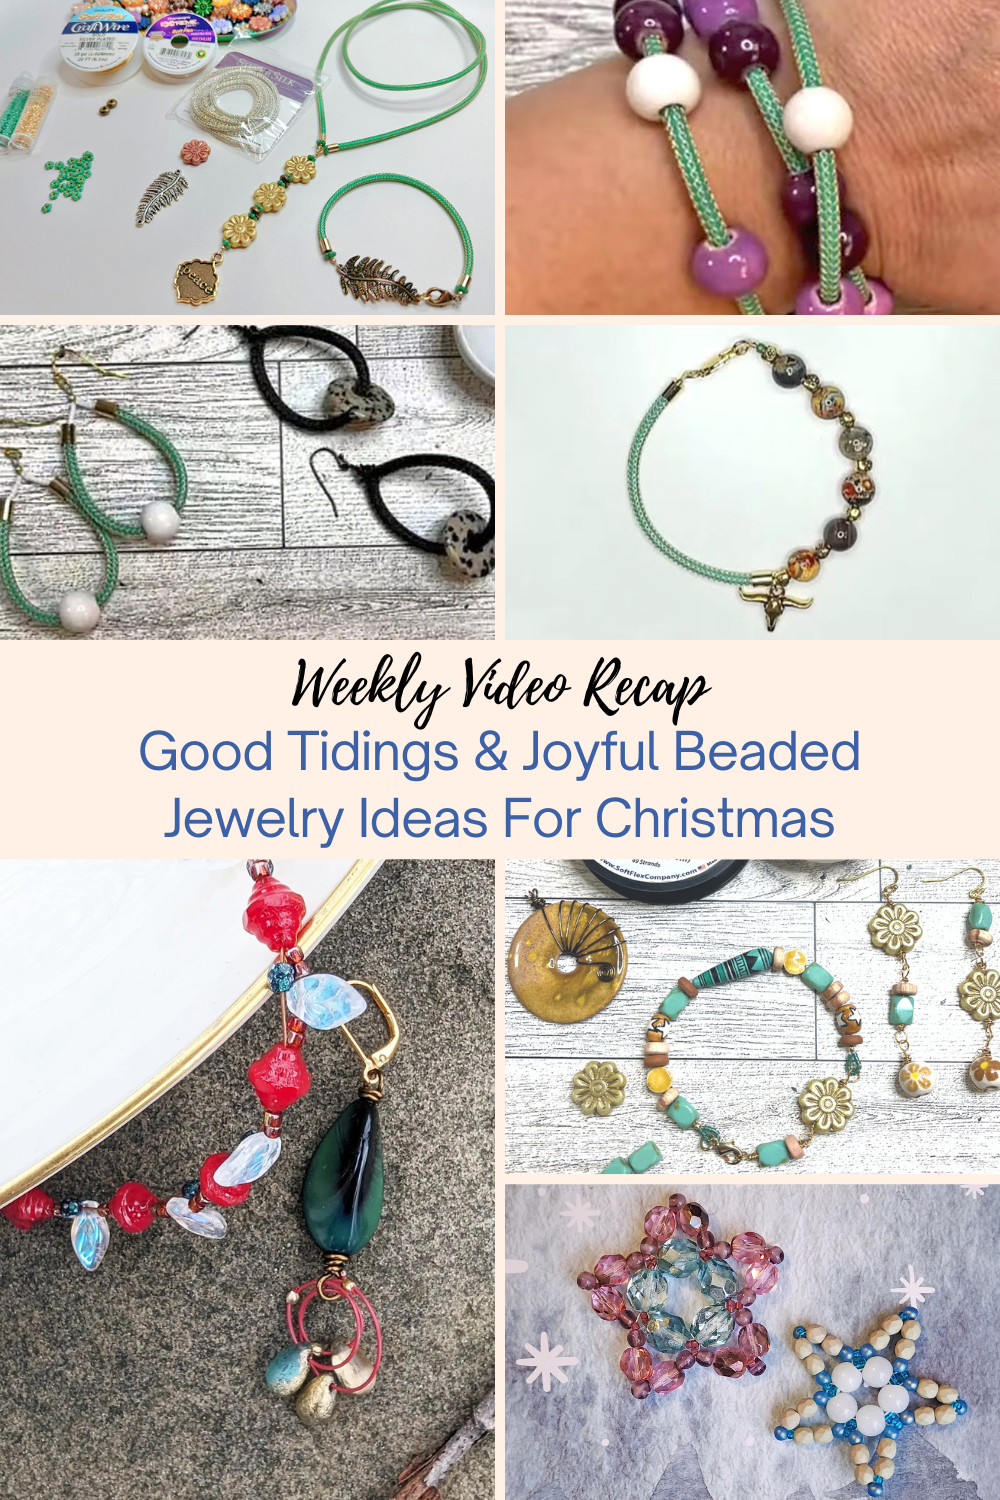 Good Tidings & Joyful Beaded Jewelry Ideas For Christmas Collage